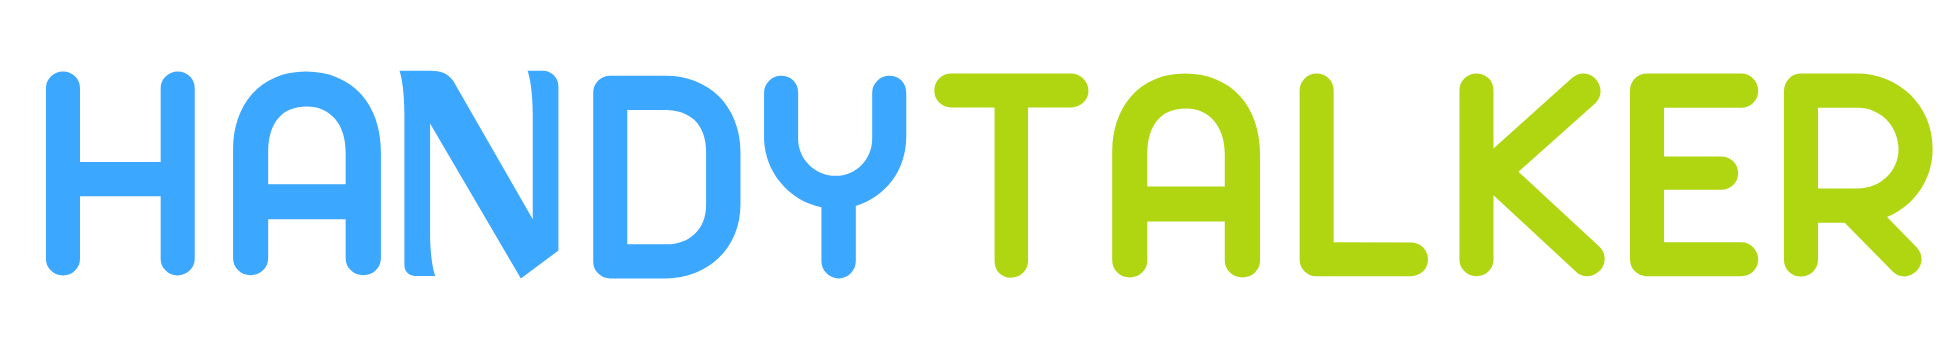 Handytalker logo